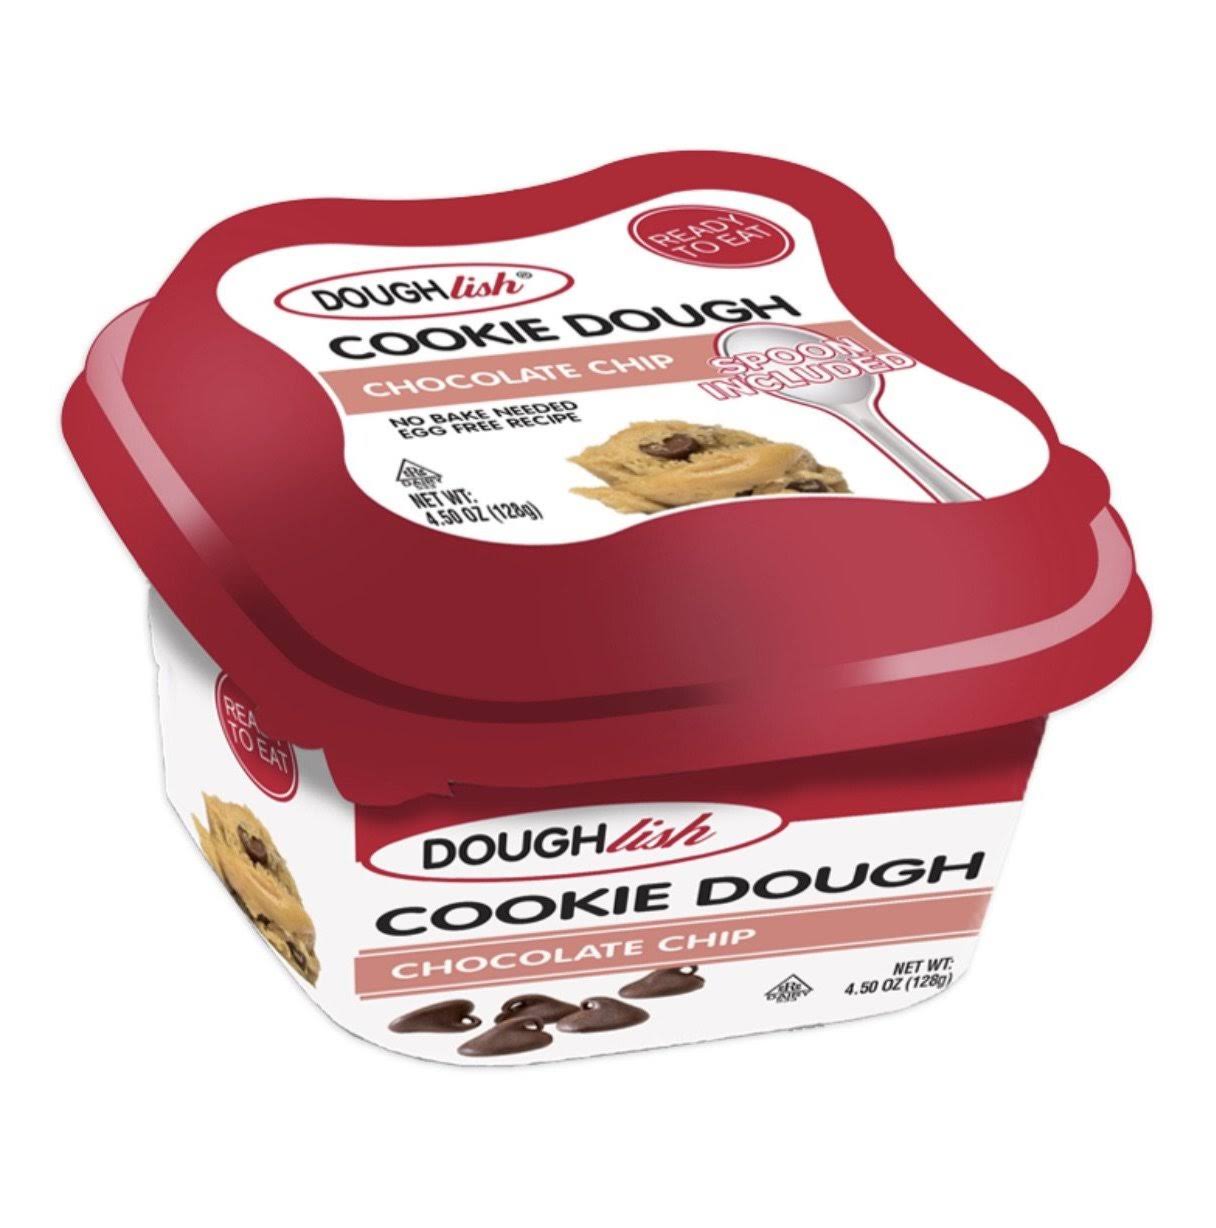 Doughlish Edible Cookie Dough - Chocolate Chip 4.5oz/4pk